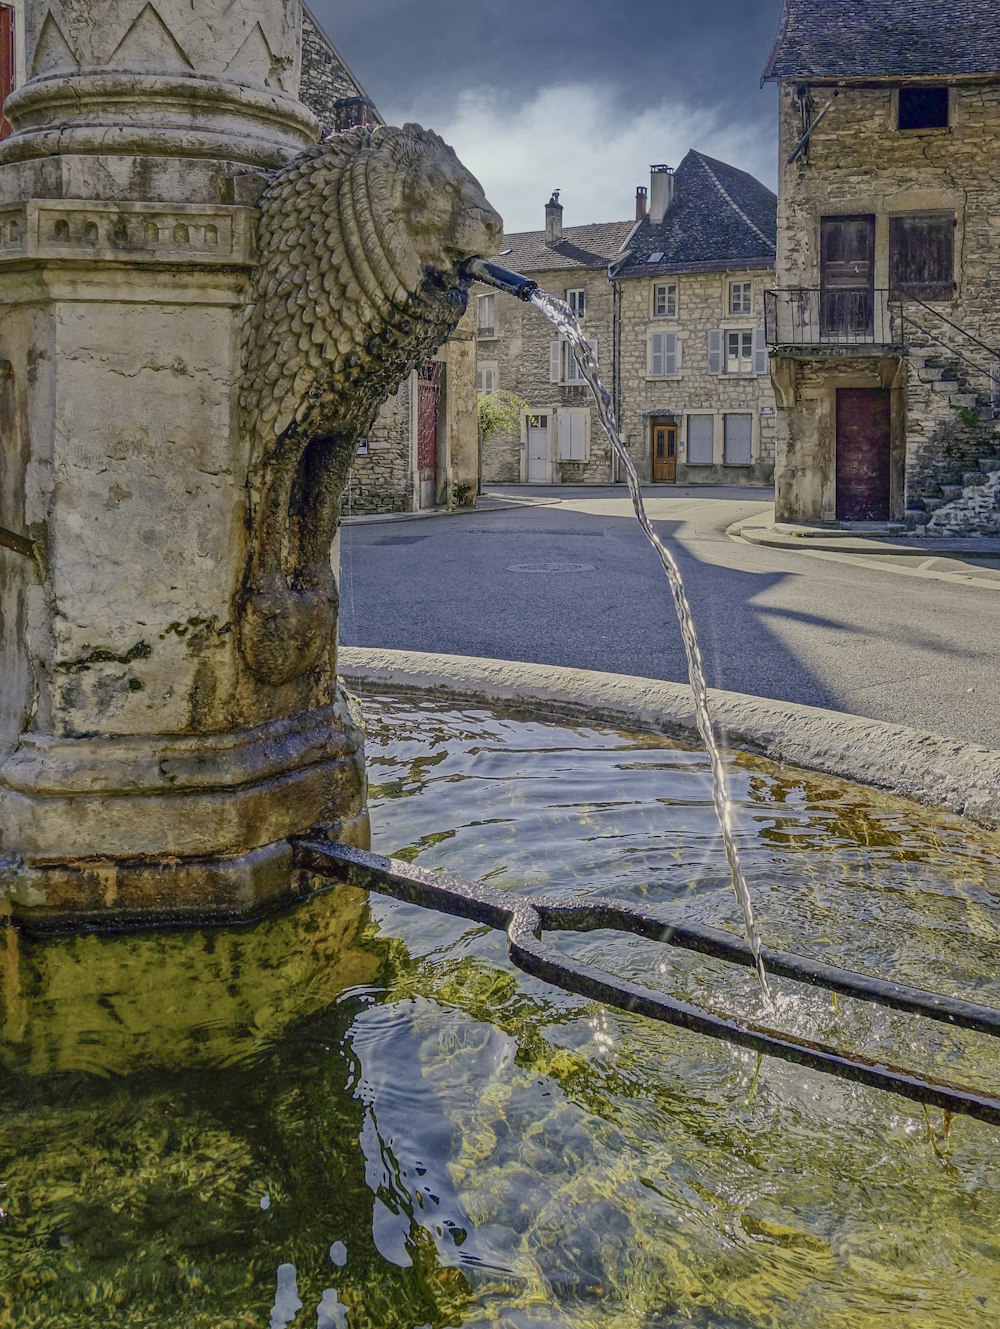 a stone fountain in a town